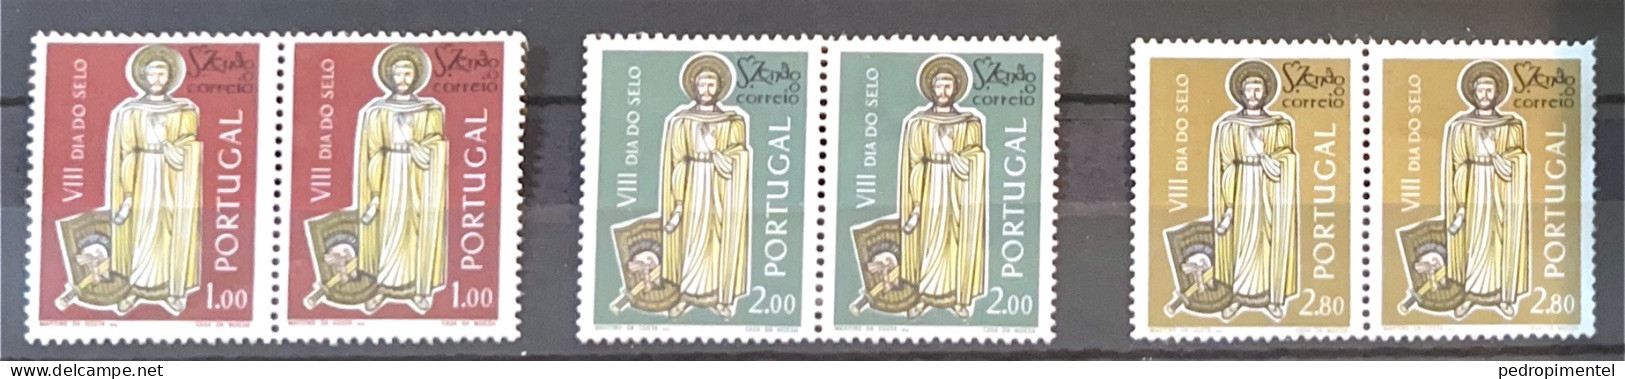 Portugal 1962 "Saint Zenon" Condition MNH #901-903 (pair) - Nuevos